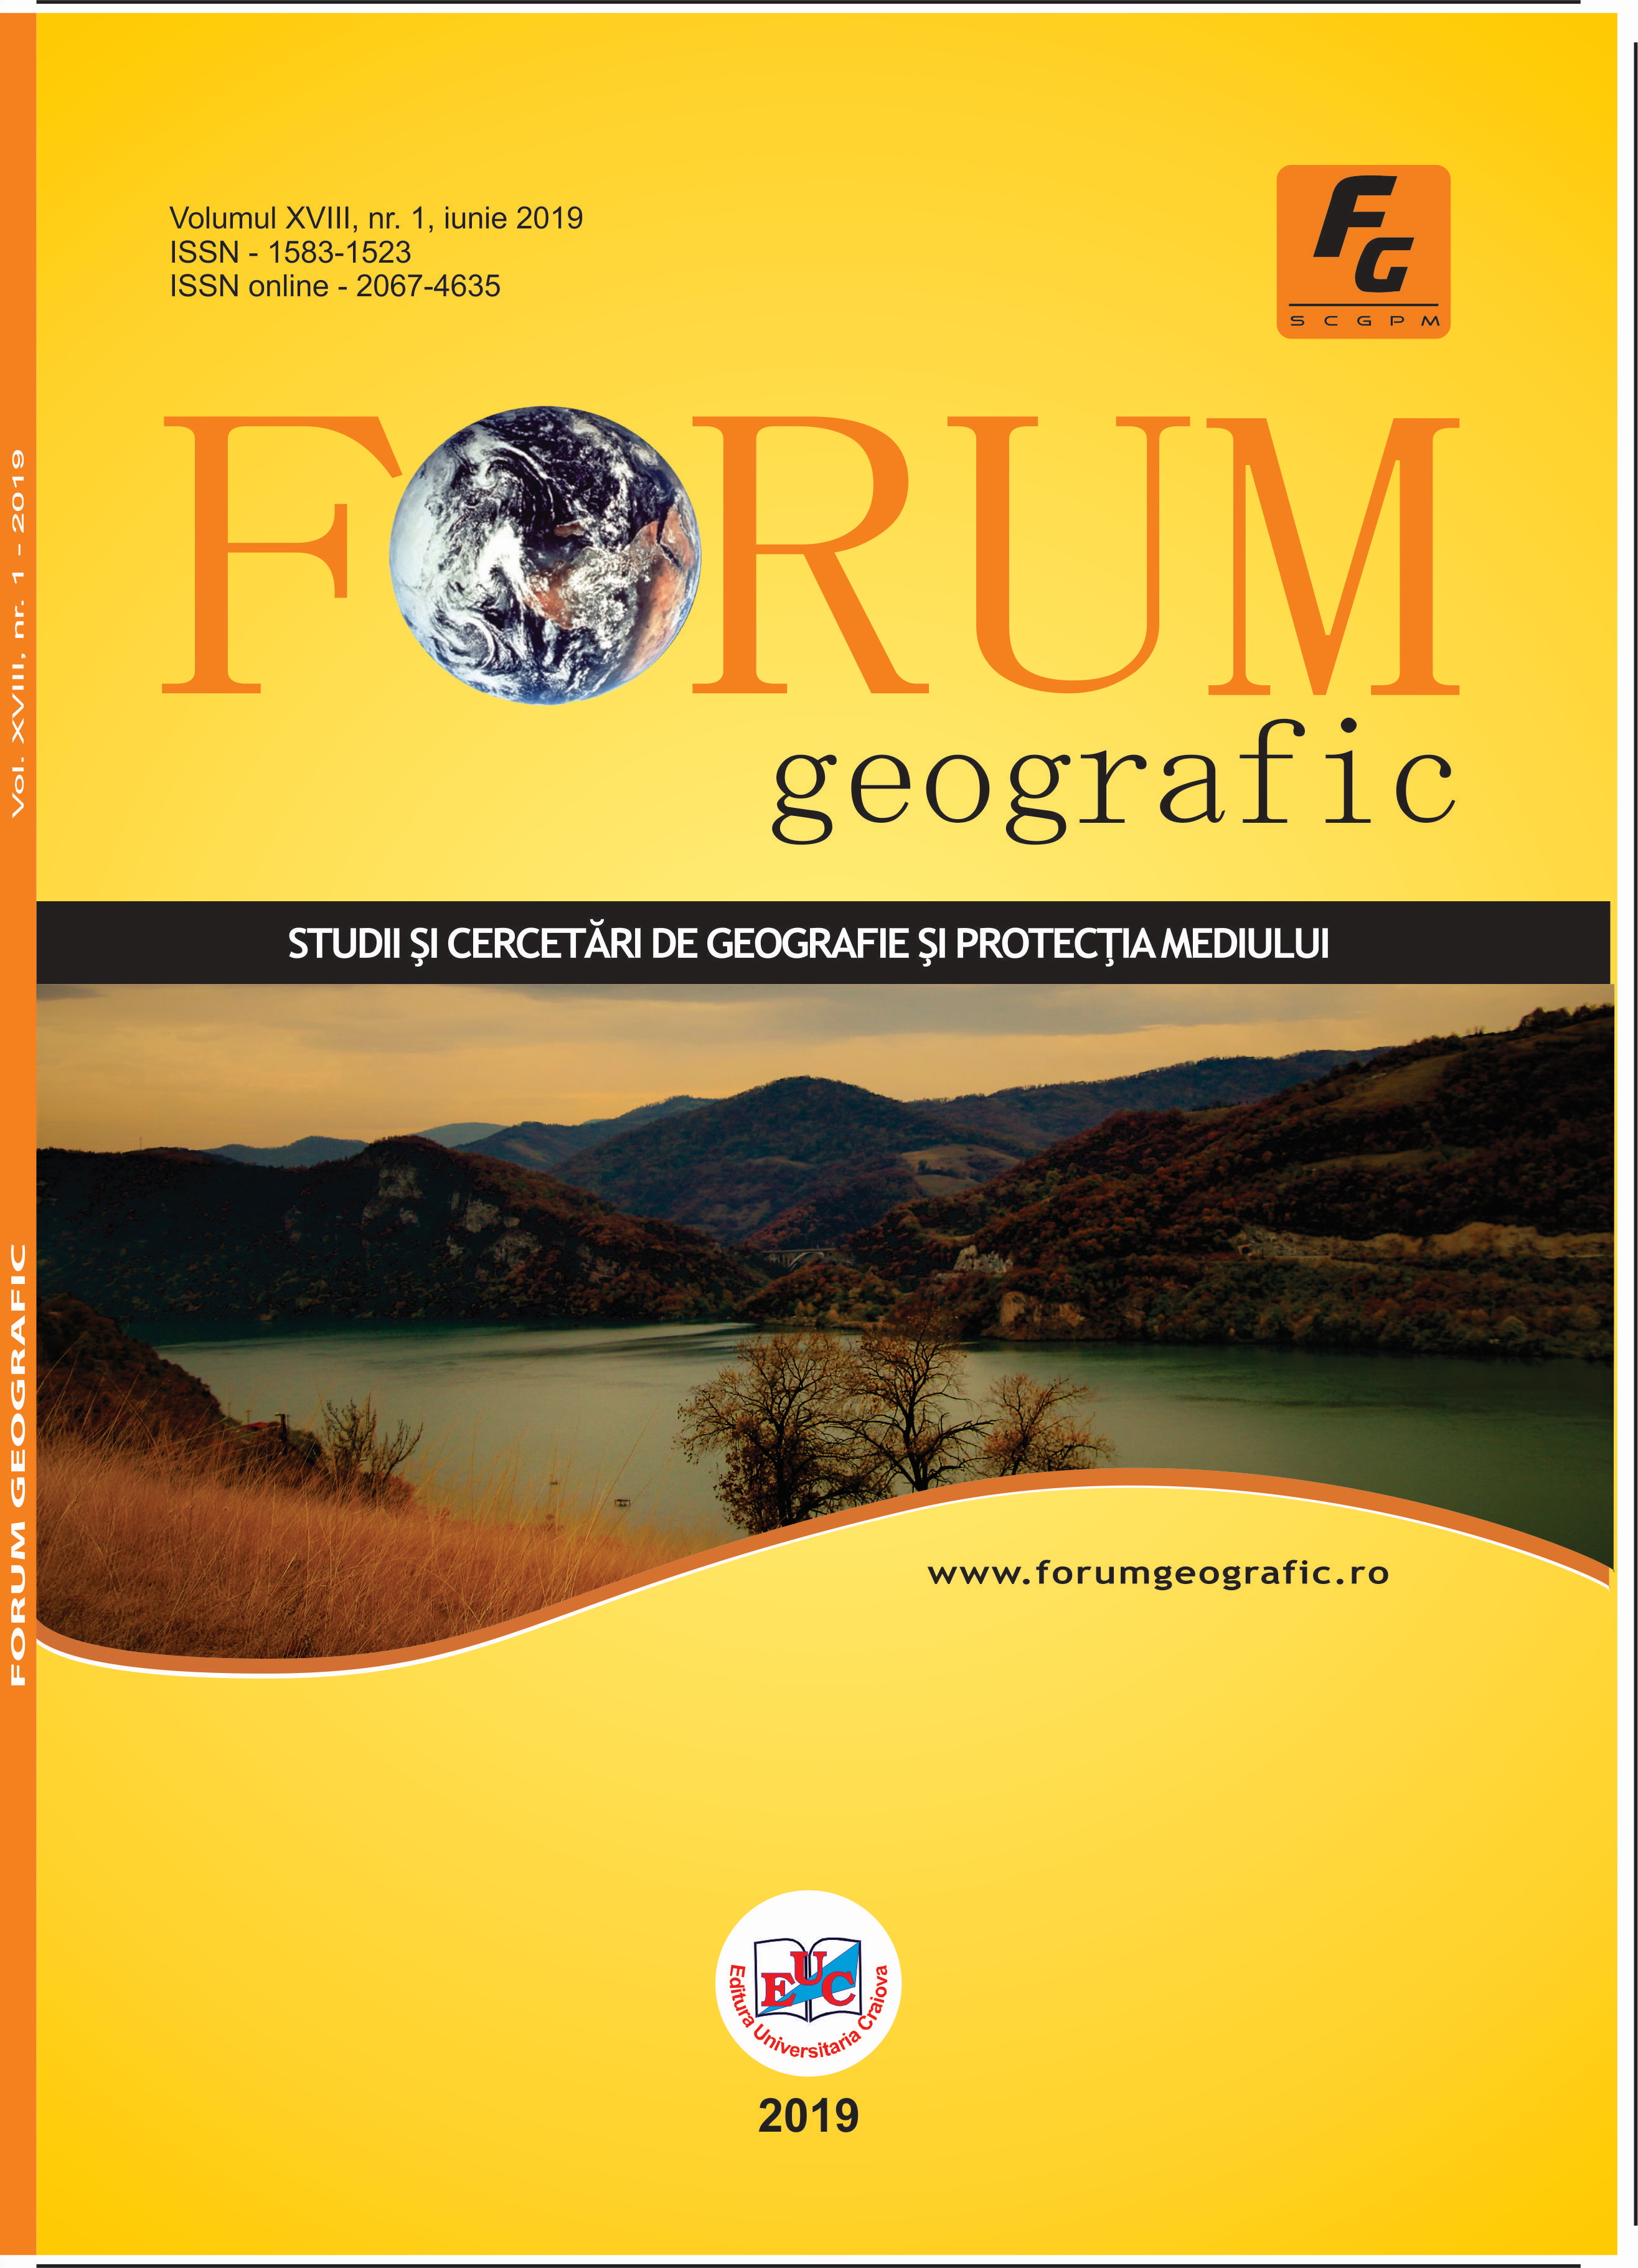 Forum geografic: Volum XVIII, număr 1